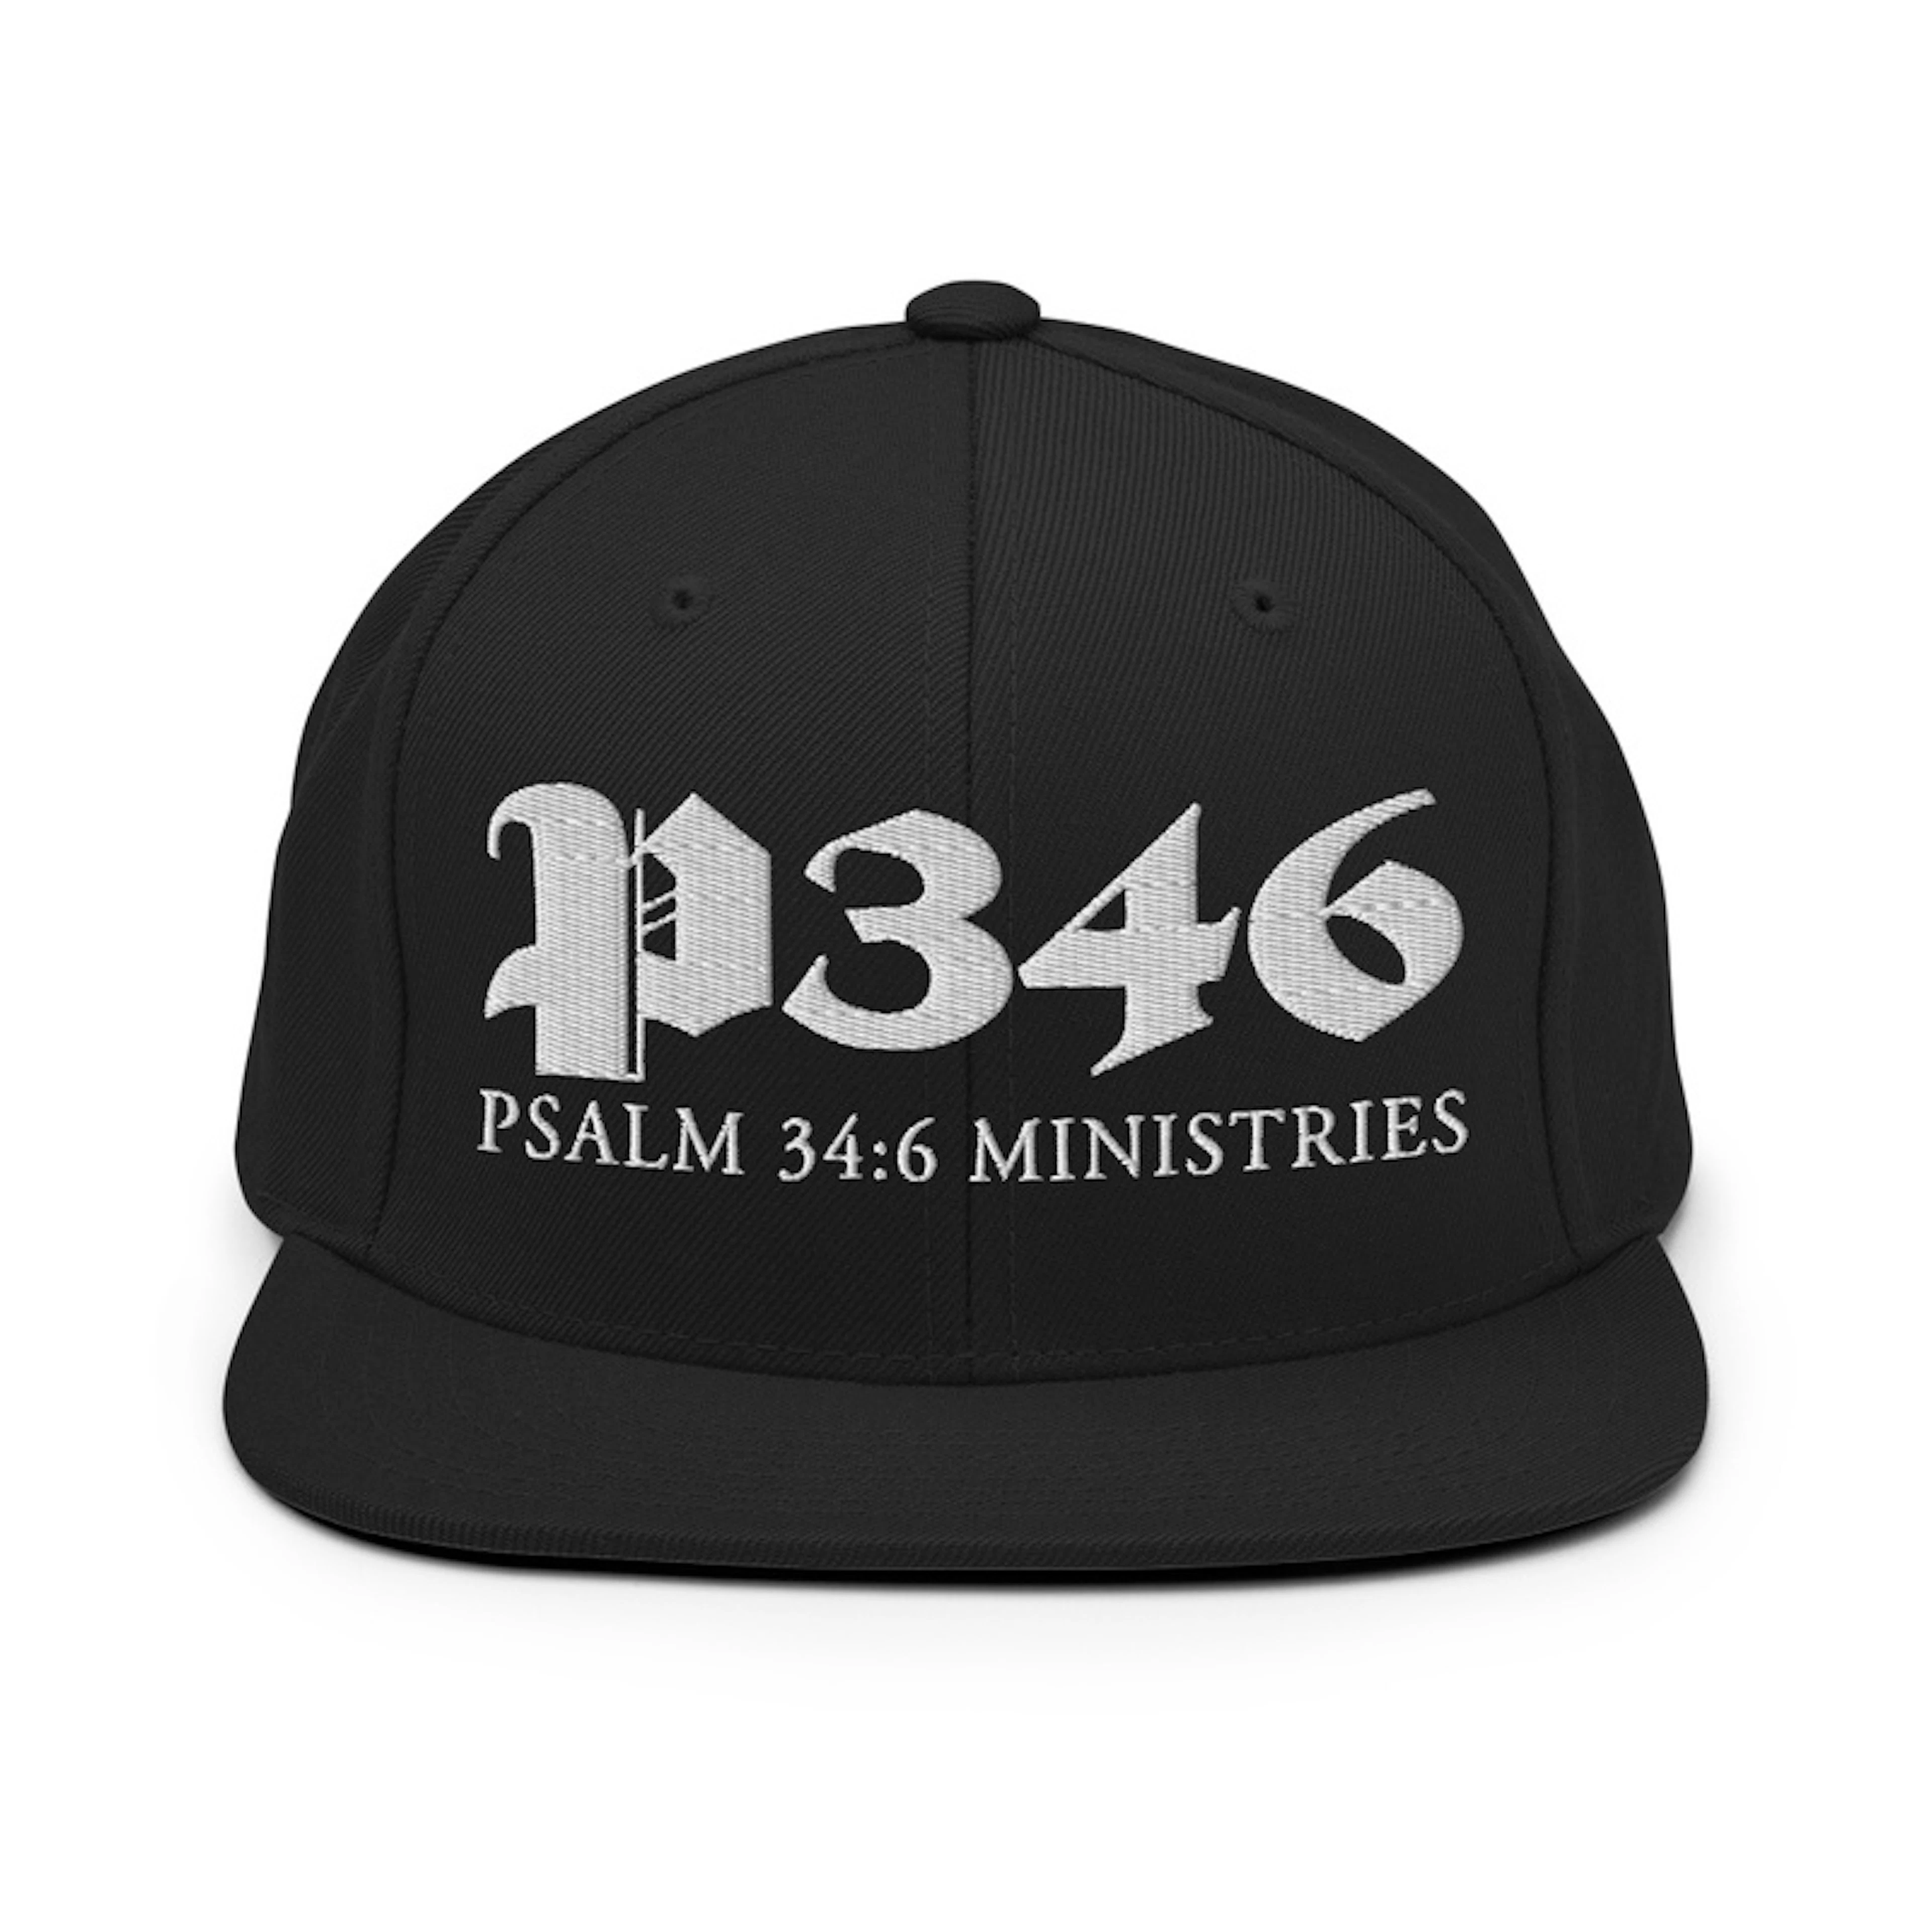 P346 Hat